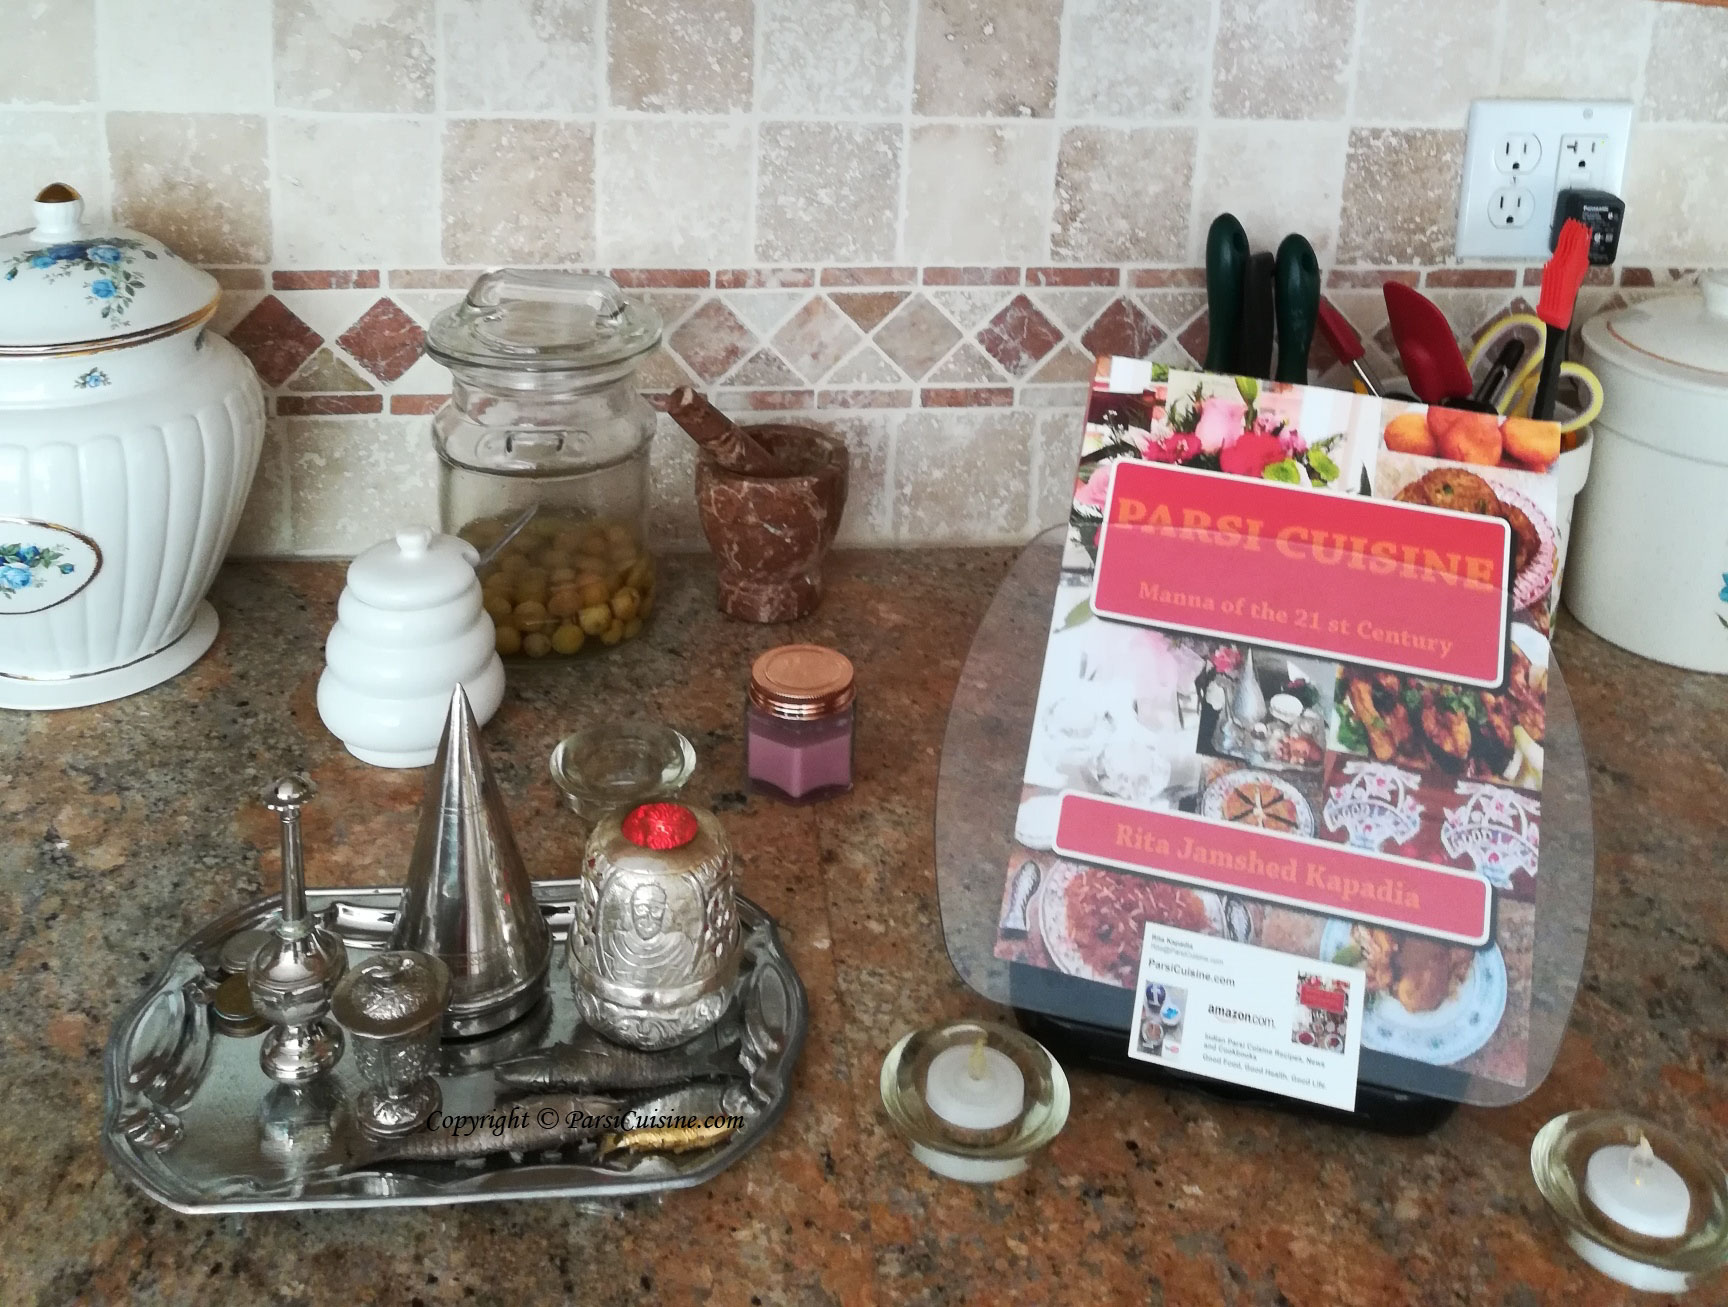 Cookbook: "Parsi Cuisine Manna of the 21st Century” by Rita Jamshed Kapadia